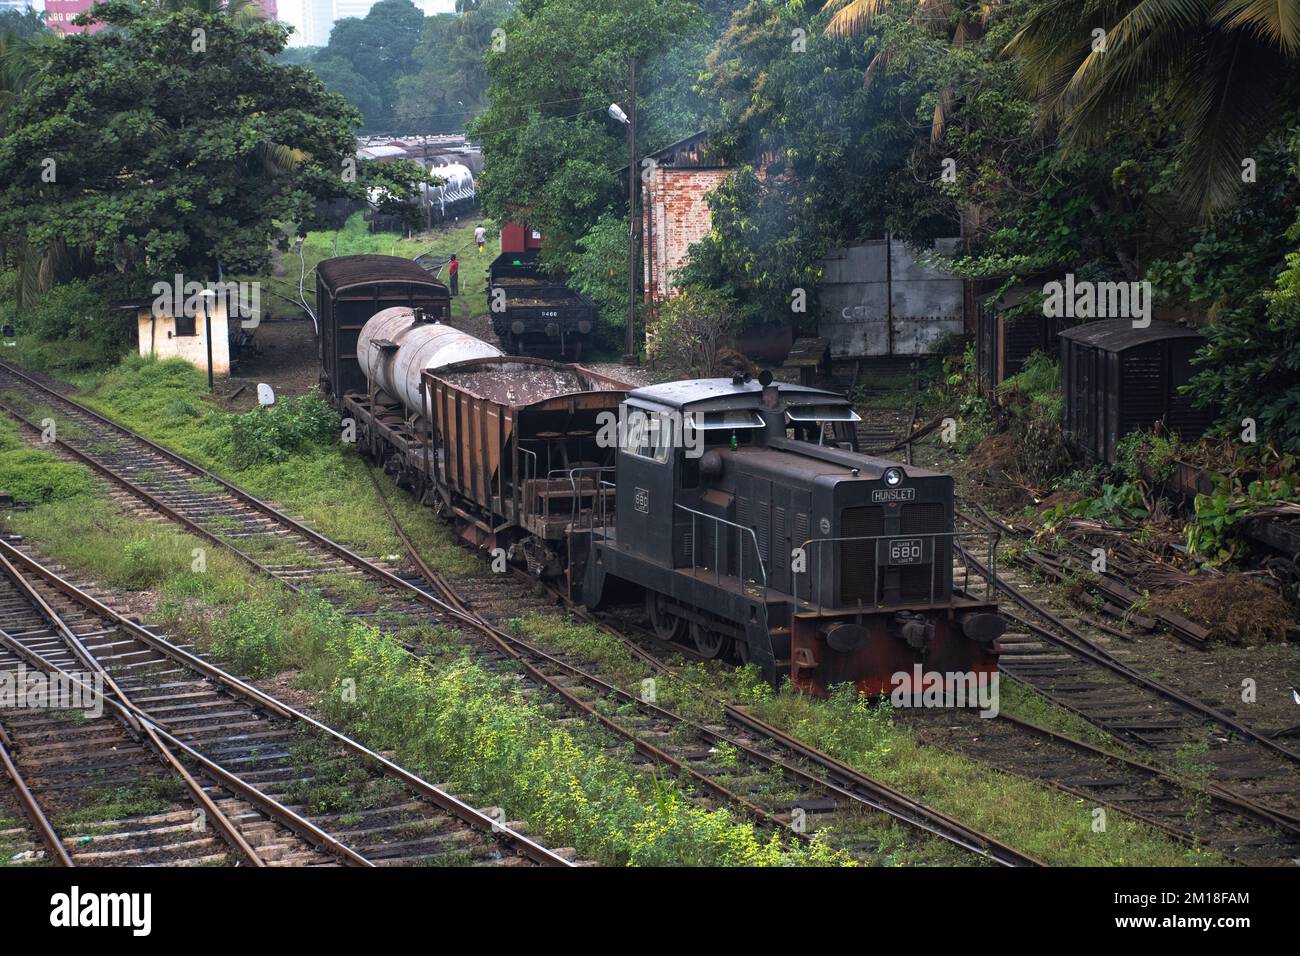 Old train on the railway Stock Photo